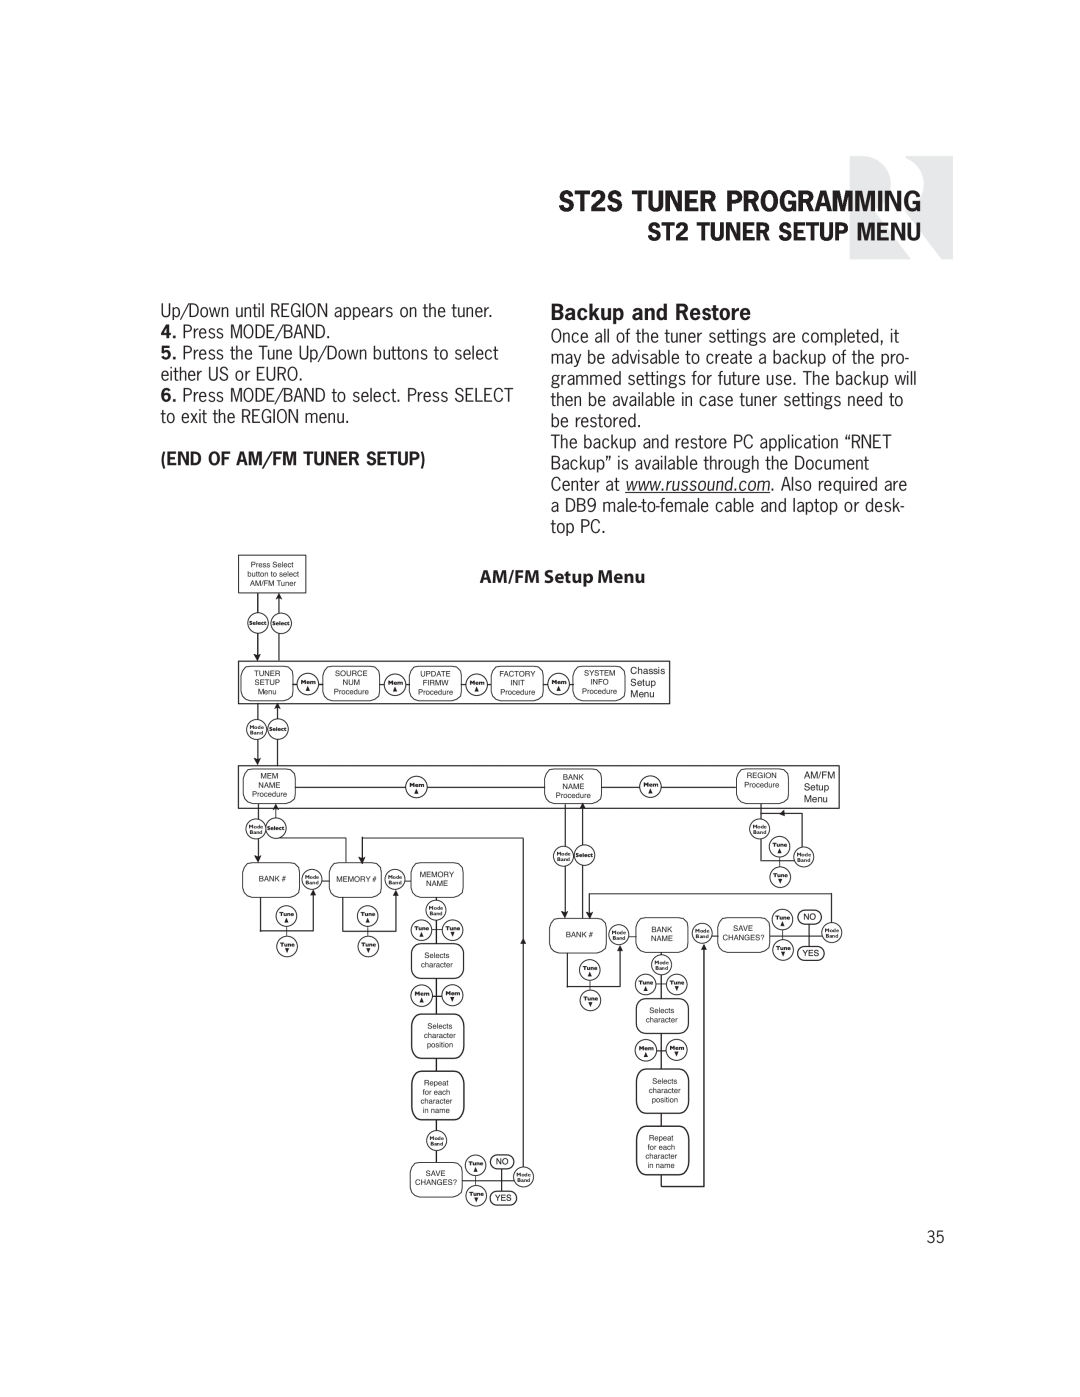 Russound installation manual Backup and Restore, ST2S TUNER PROGRAMMING, ST2 TUNER SETUP MENU, AM/FM Setup Menu 